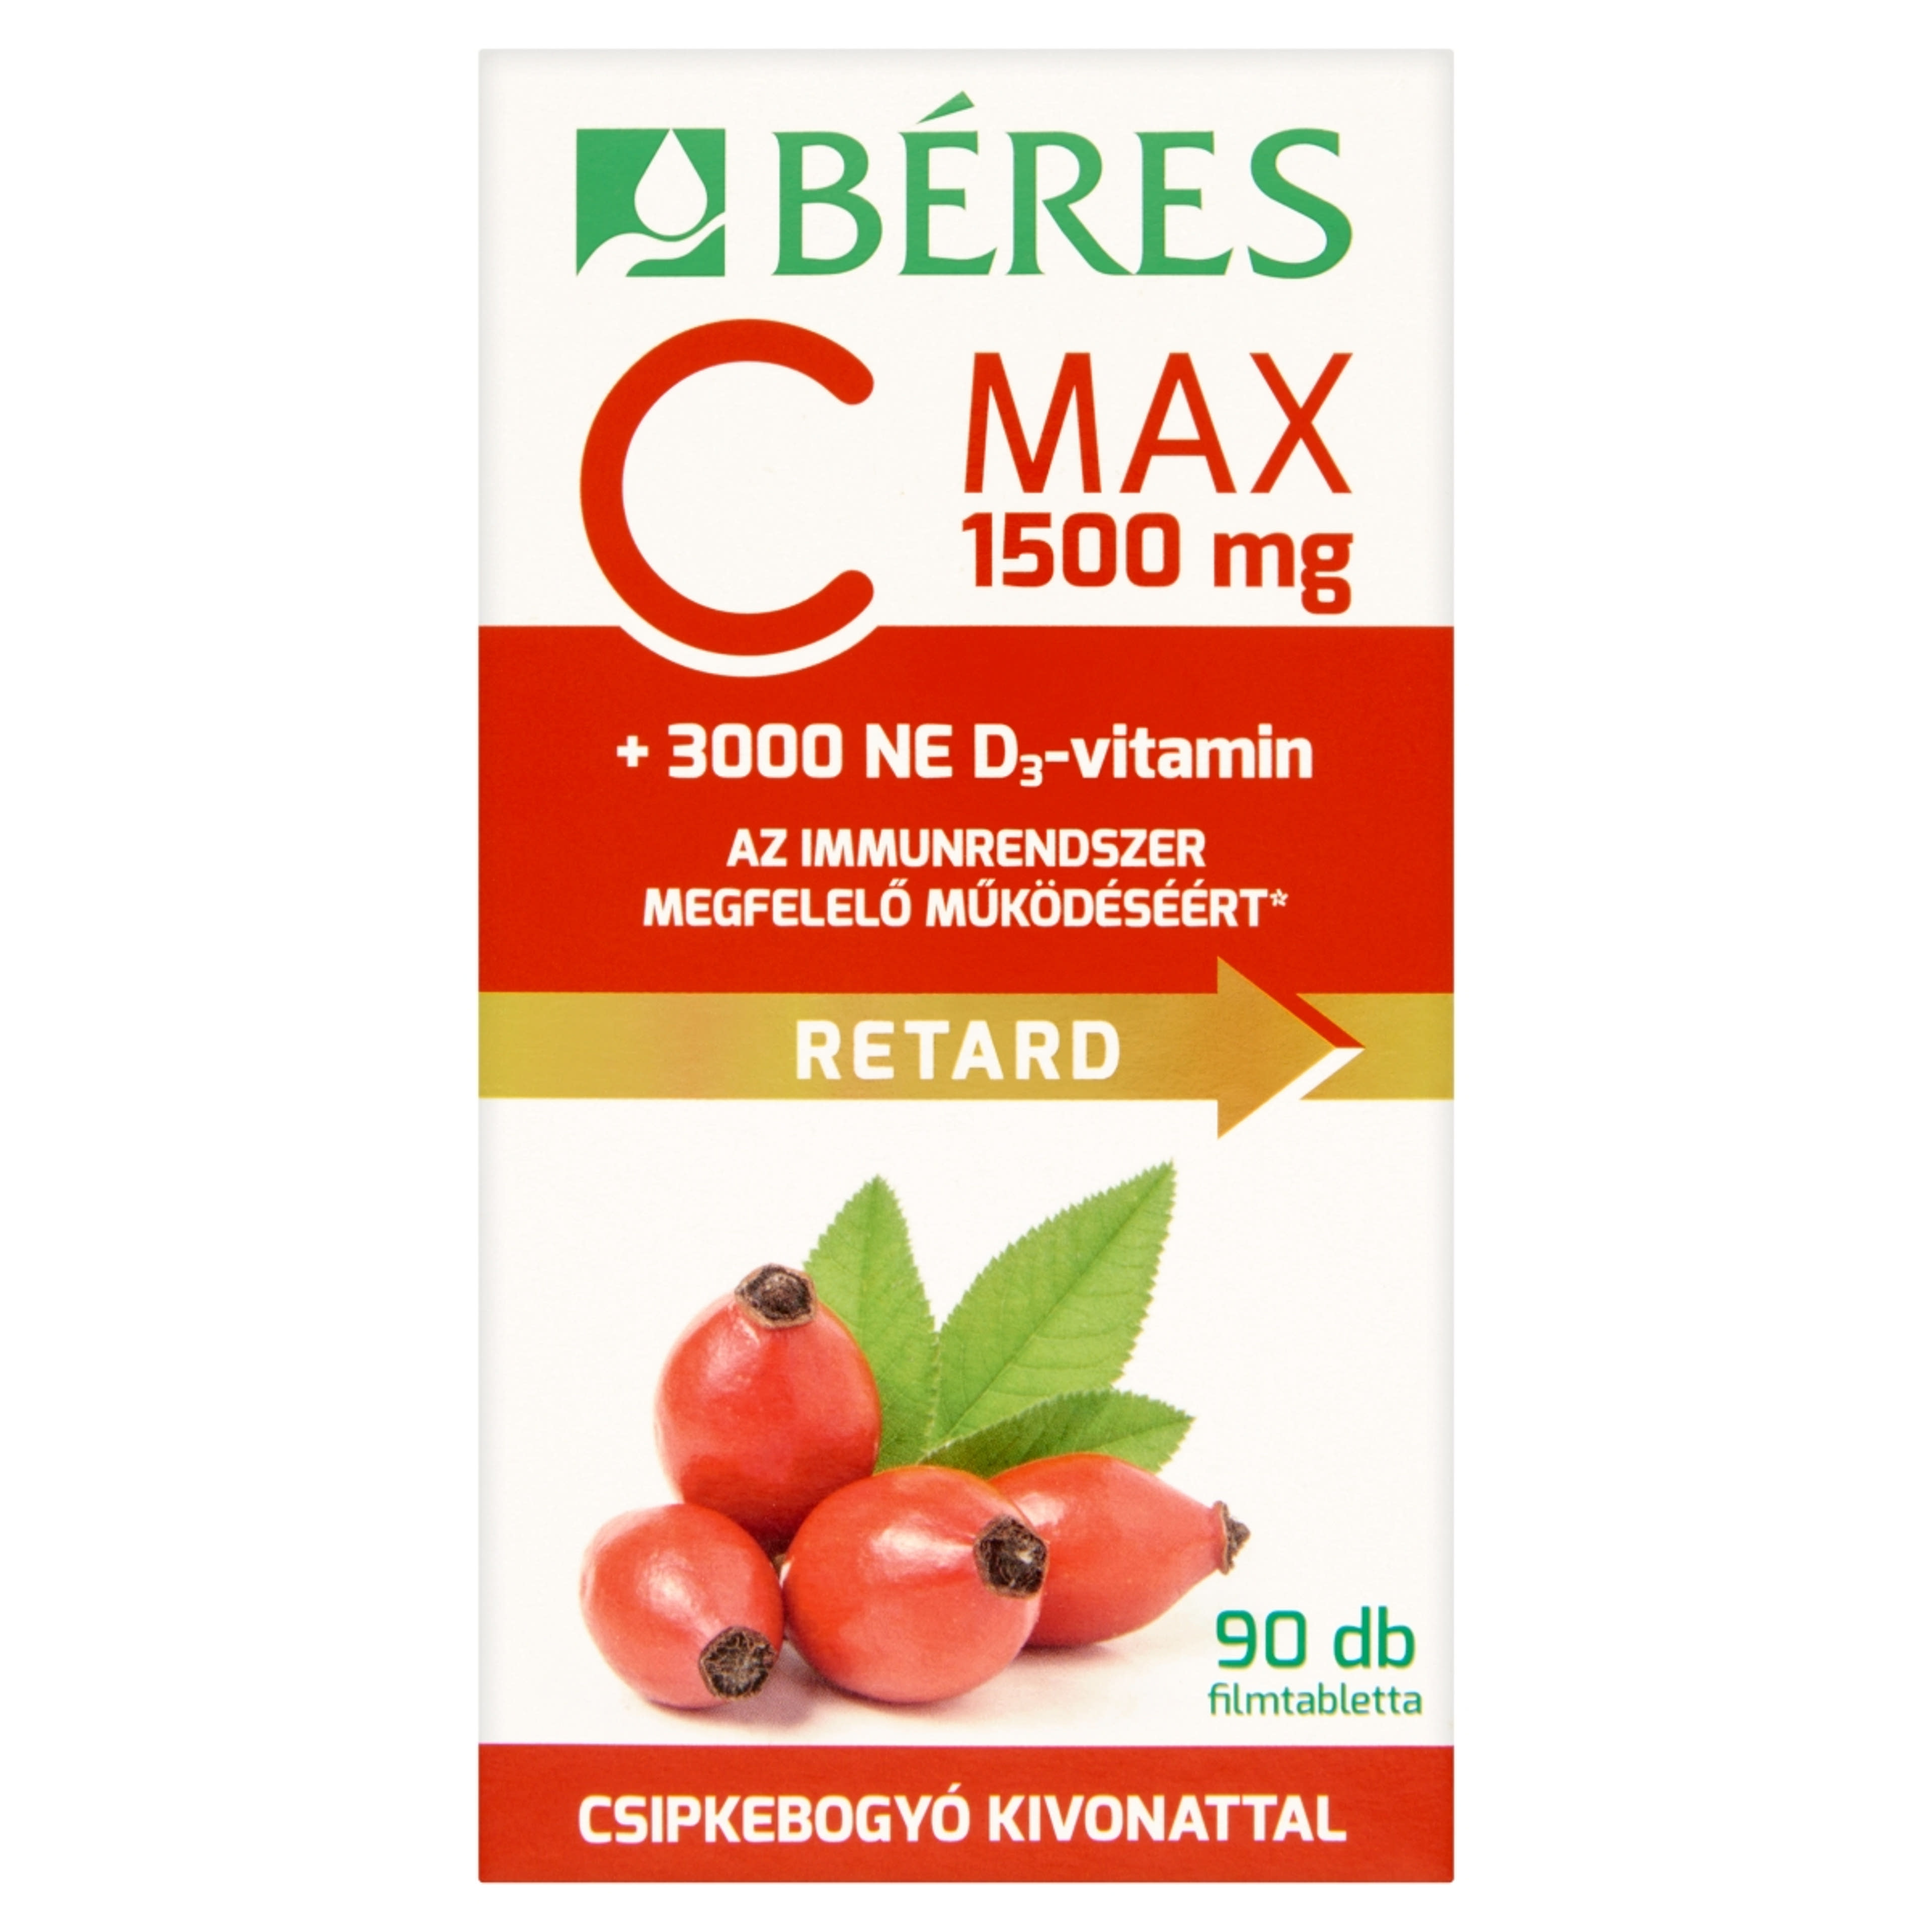 Béres C MAX 1500 mg RETARD csipkebogyó kivonattal + 3000 NE D₃-vitamin filmtabletta - 90 db